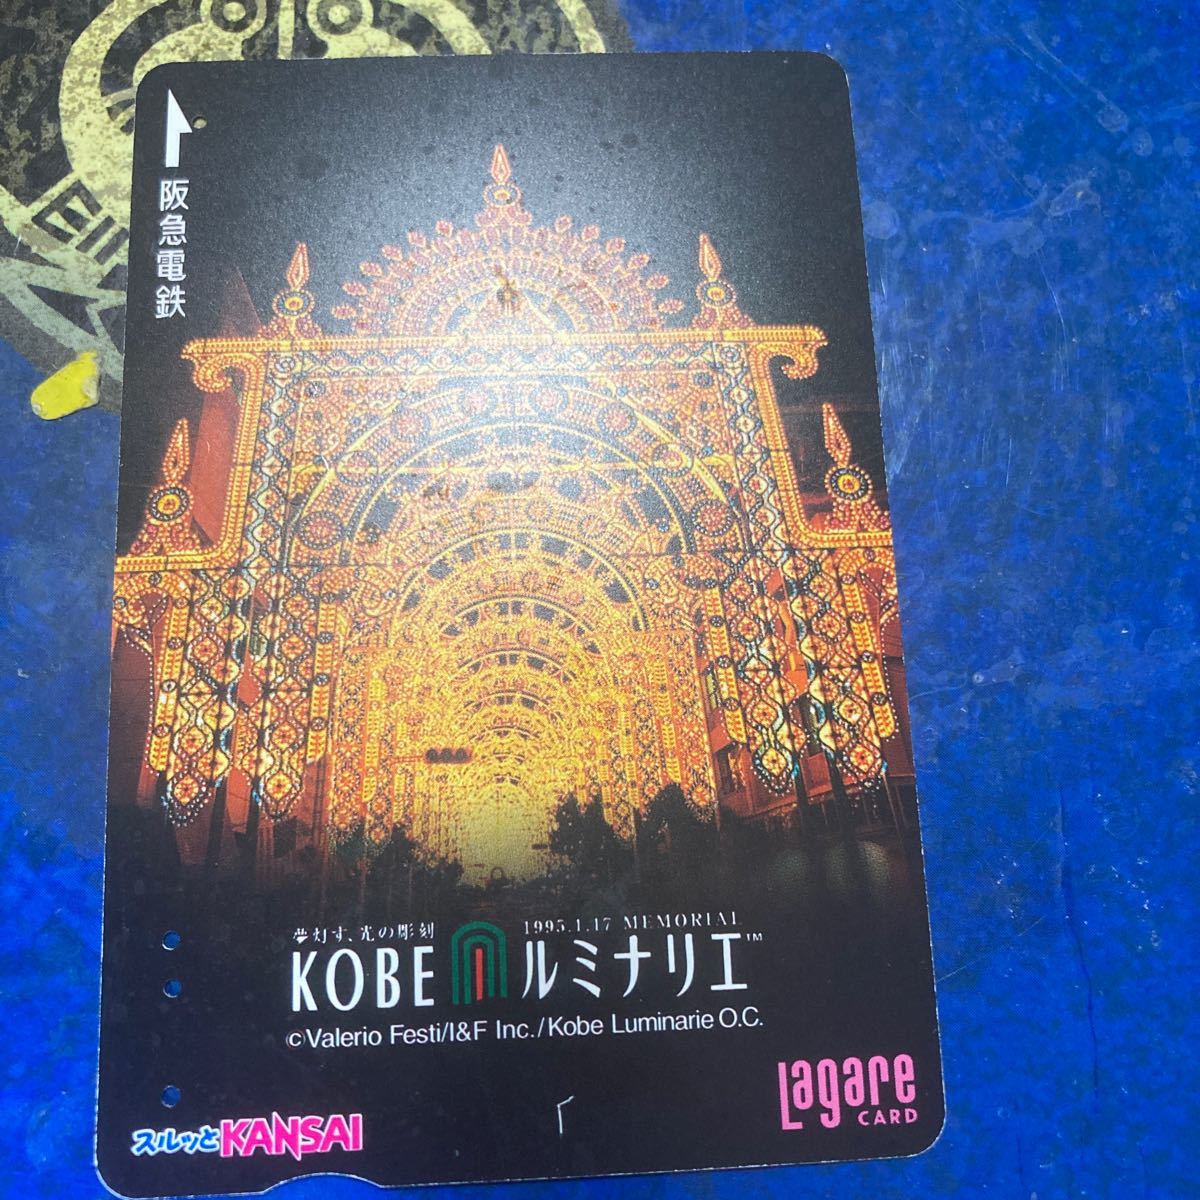  Surutto kansai. внезапный электро- металлический la девушка карта Kobe ruminalie свет. арка 